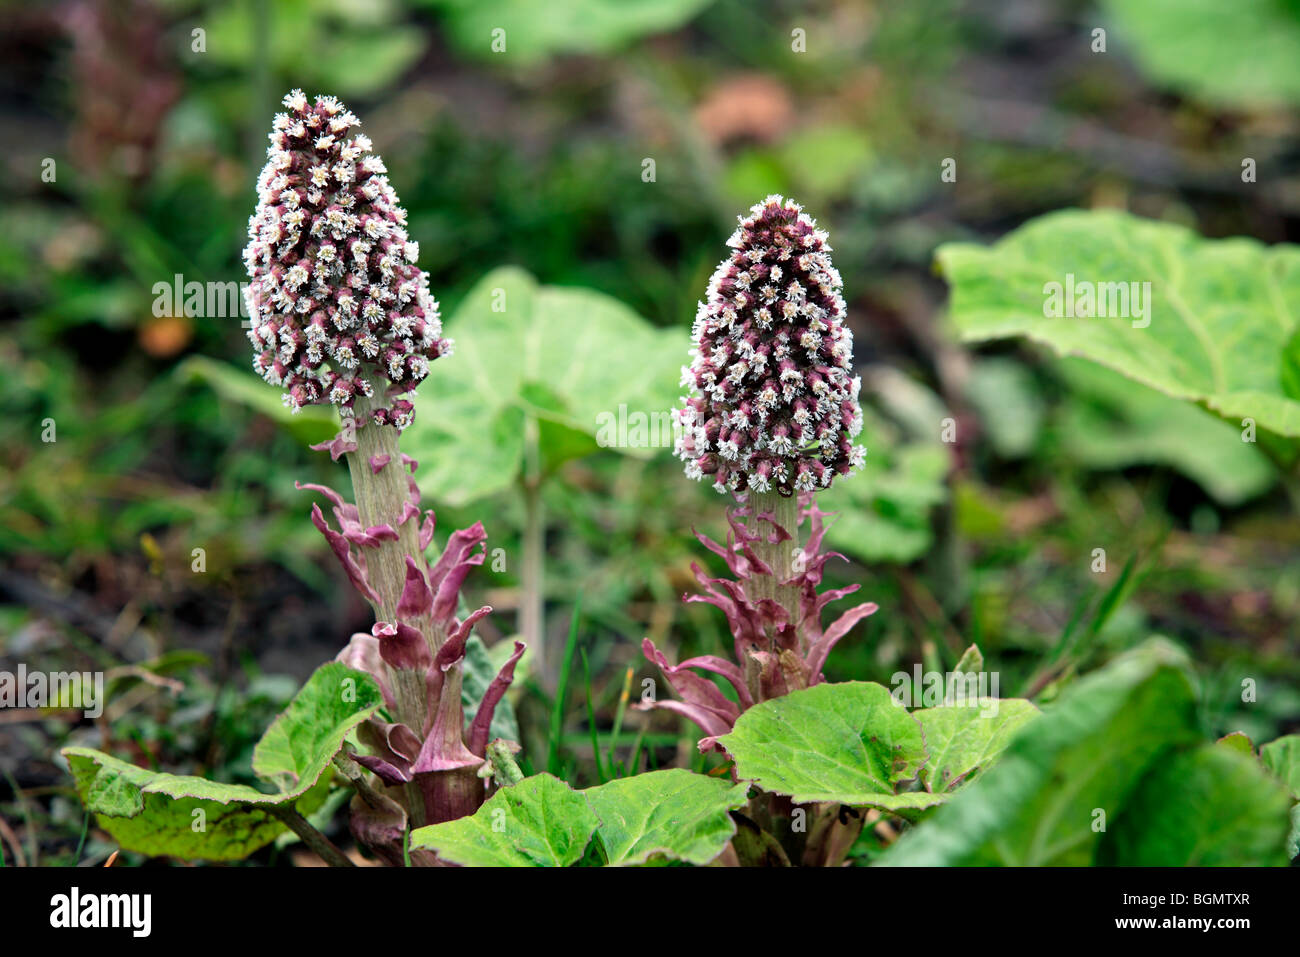 Common butterbur / bog rhubarb (Petasites hybridus / Petasites officinalis) in flower Stock Photo